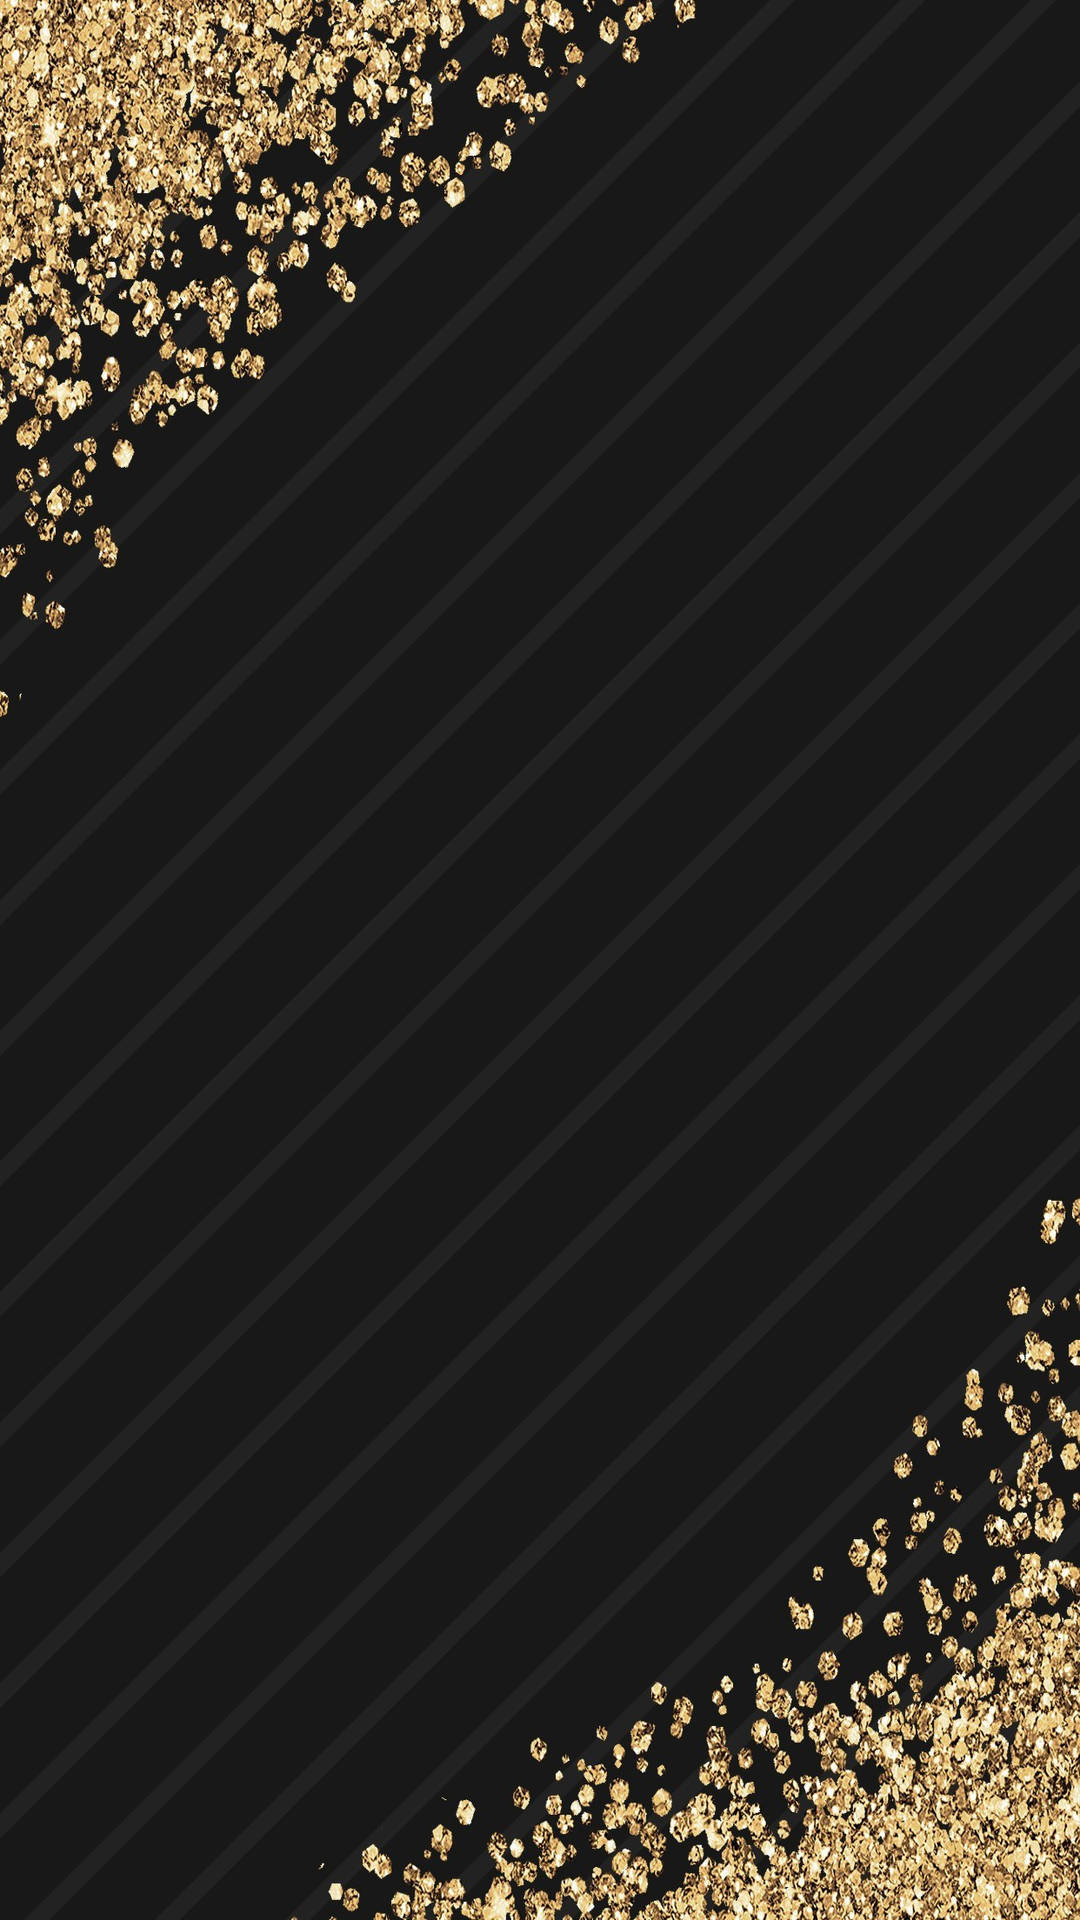 Striped Gold Glitter Black Backdrop For Phone